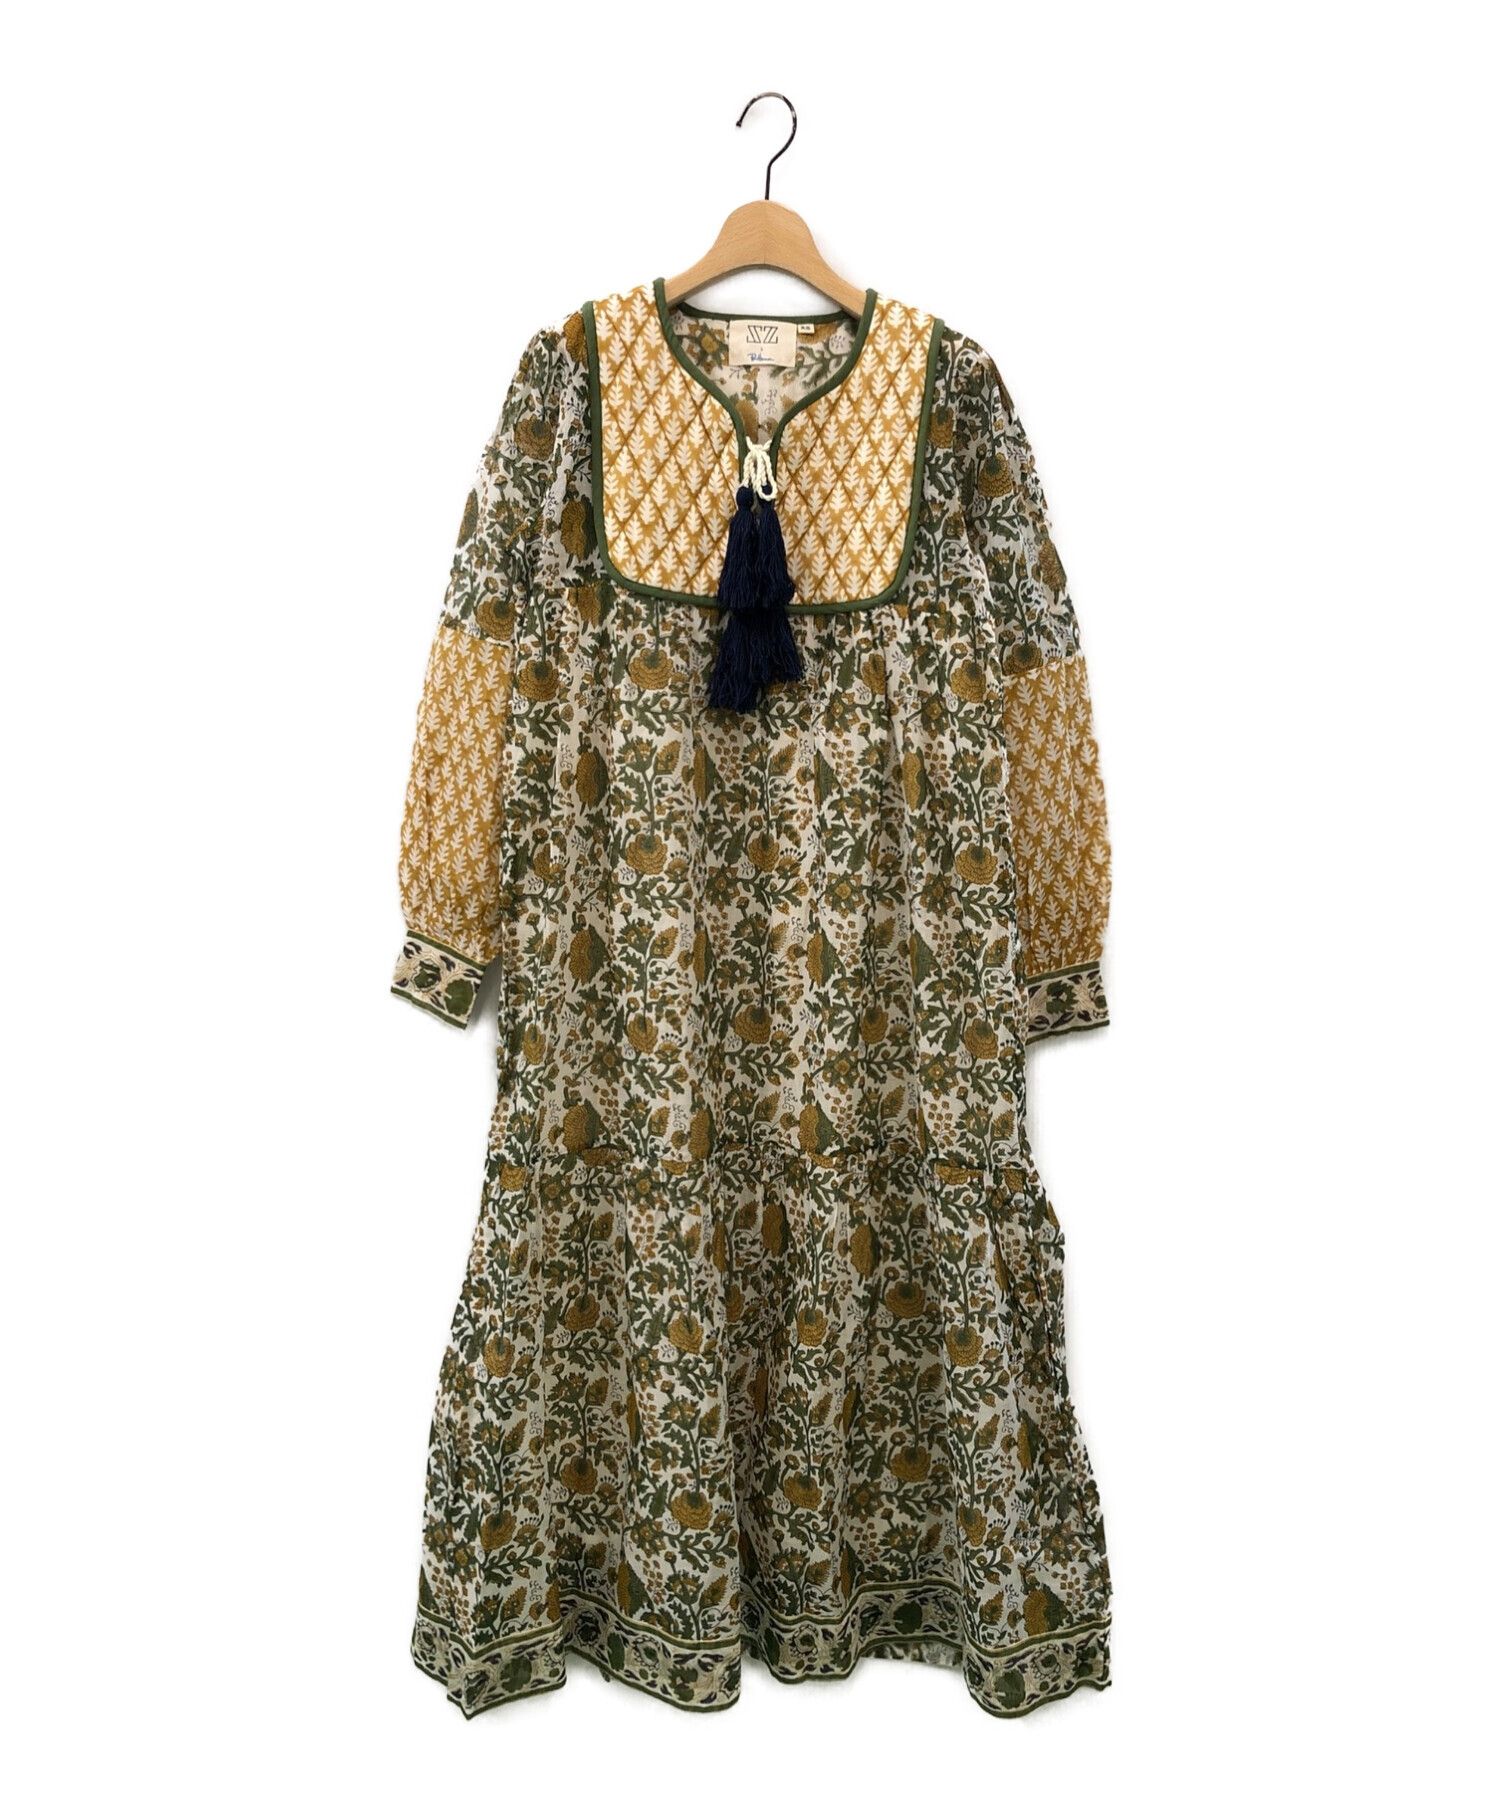 専用✴︎試着のみ✴︎SZ Blockprints Jodhpur Dress SZ Silk - Eva